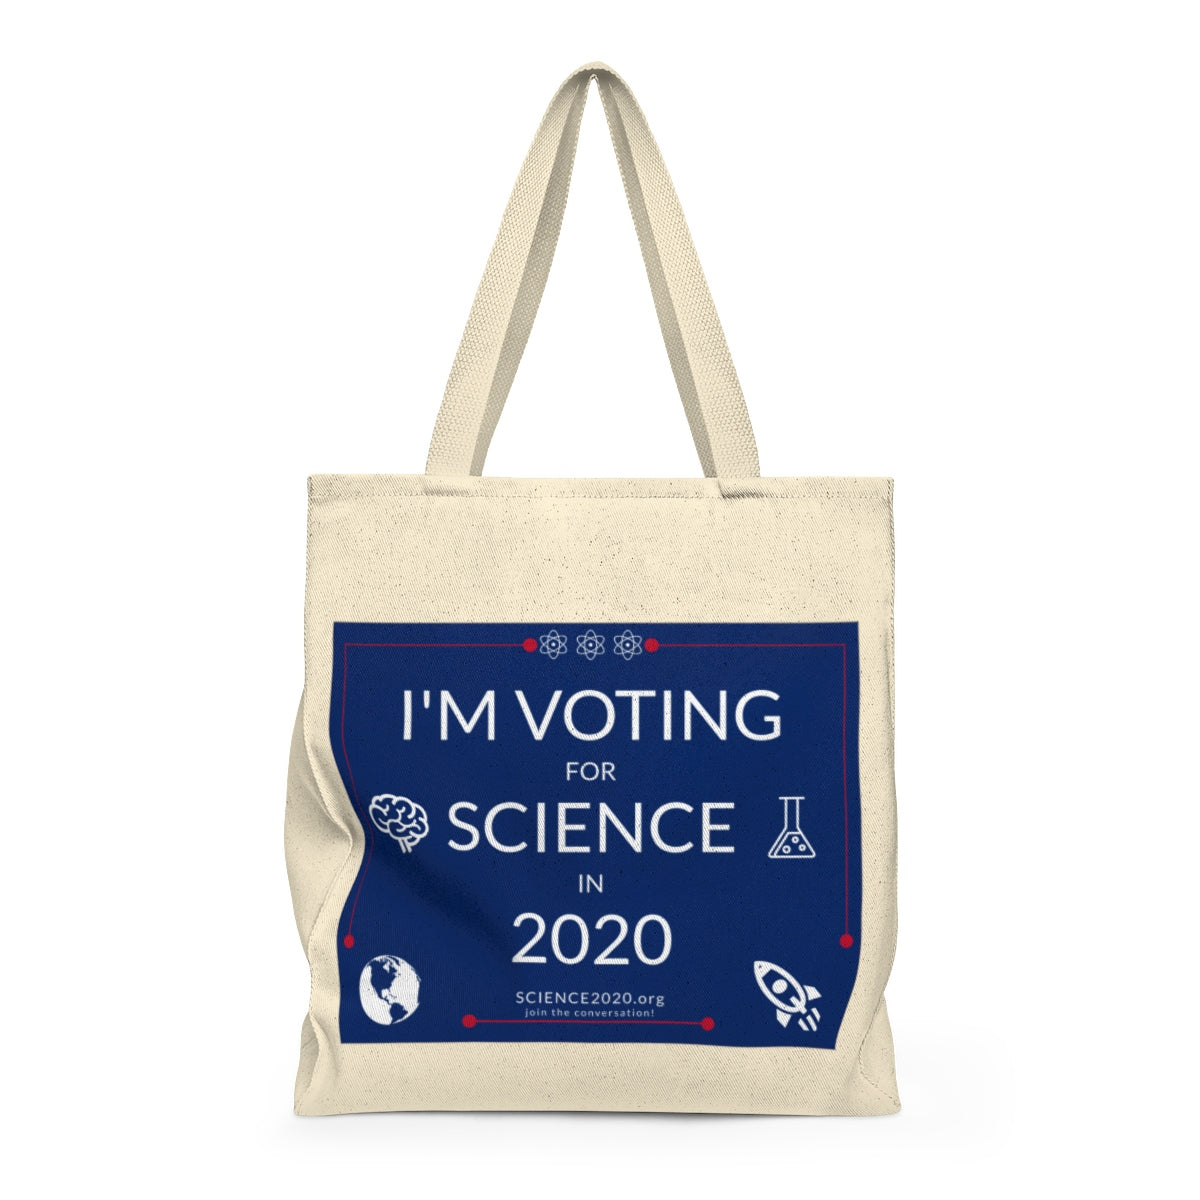 GLG - I'm voting for science in 2020 tote bag